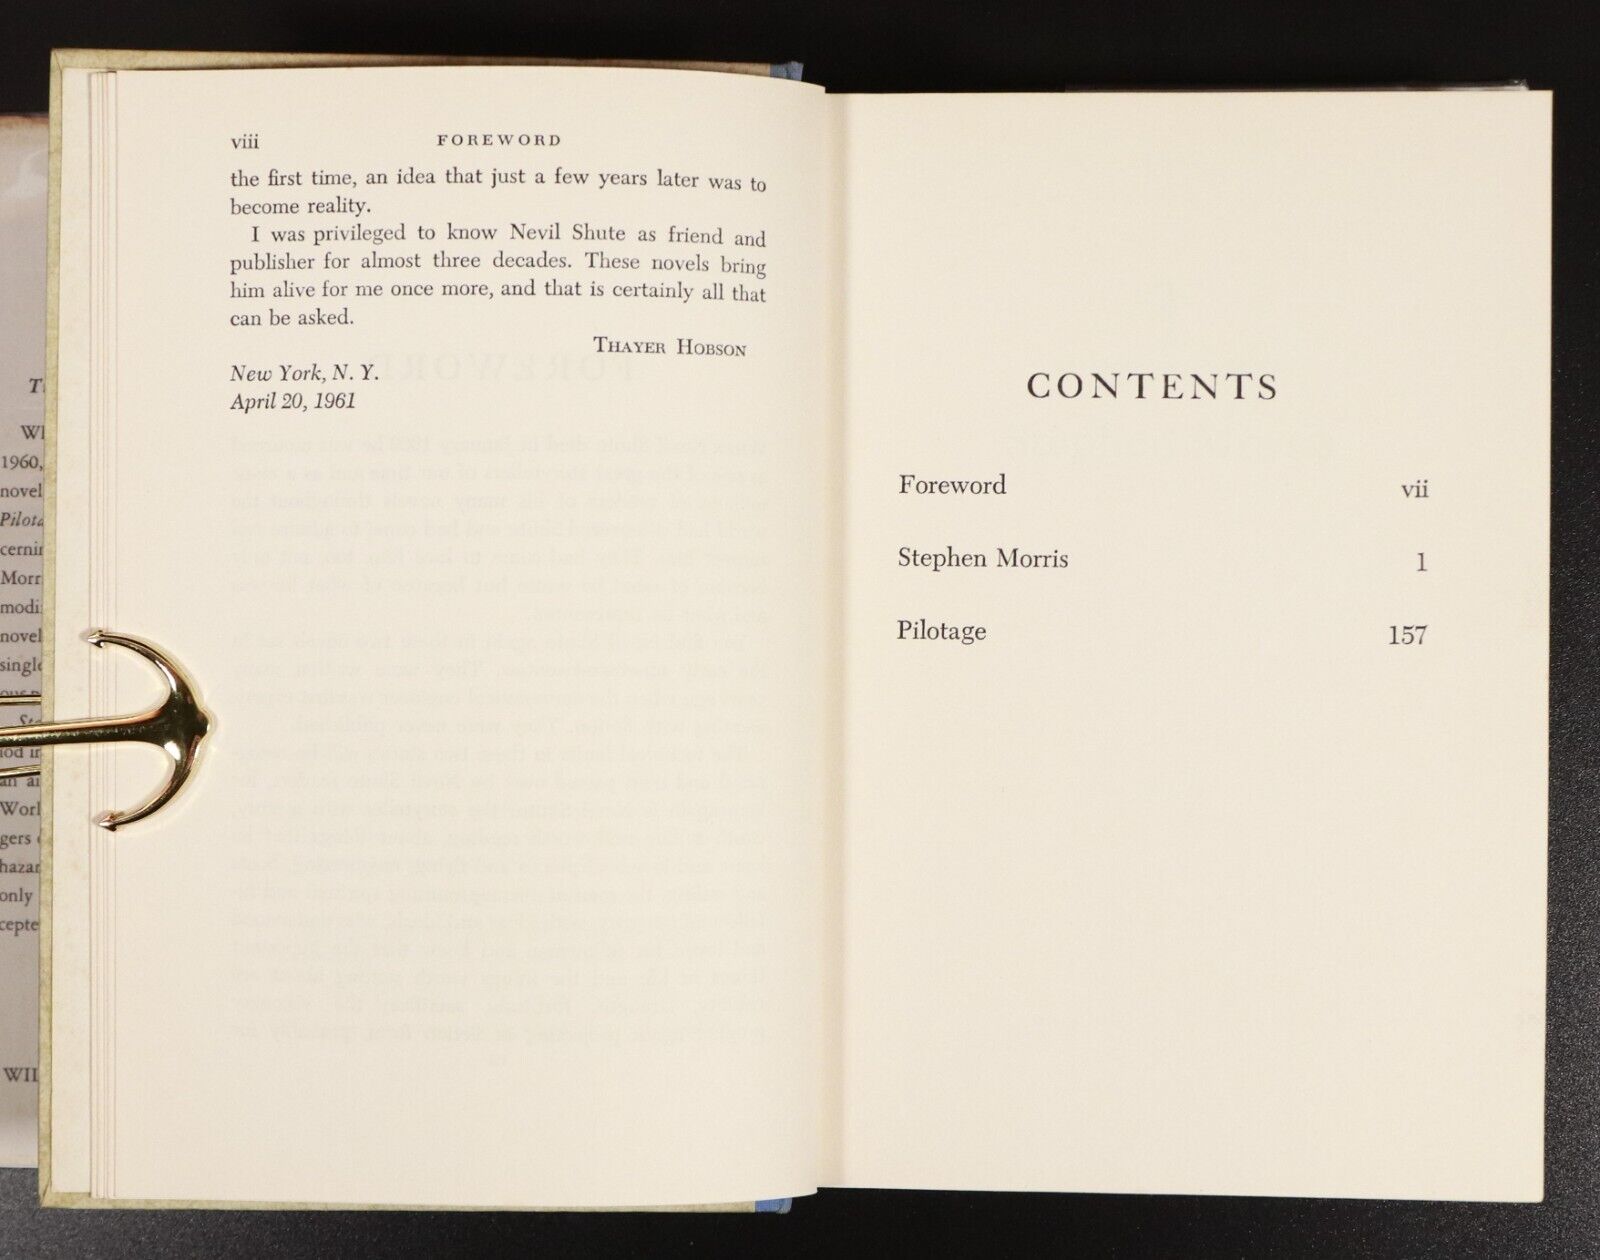 1961 Stephen Morris by Nevil Shute Vintage British Fiction Book 1st US Edition